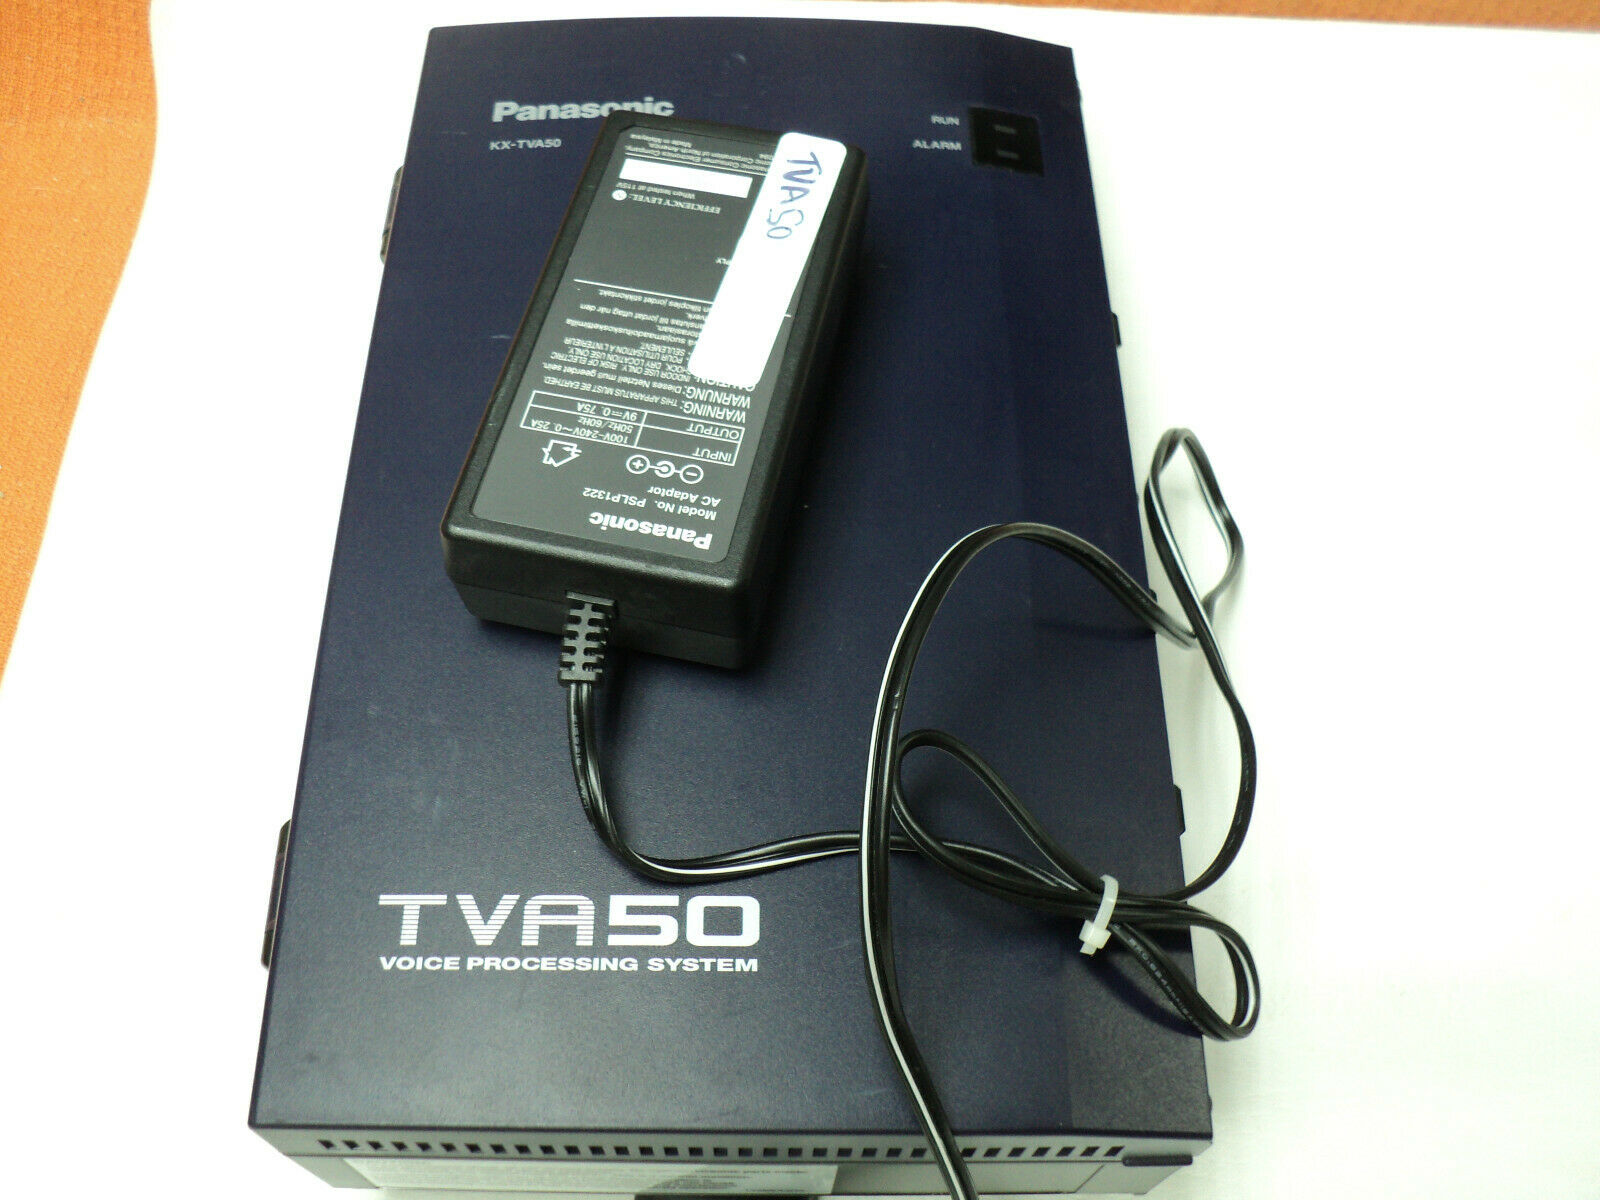 Panasonic Kx-tva50 Voice Mail Processing System & Power Unit 2 Ports